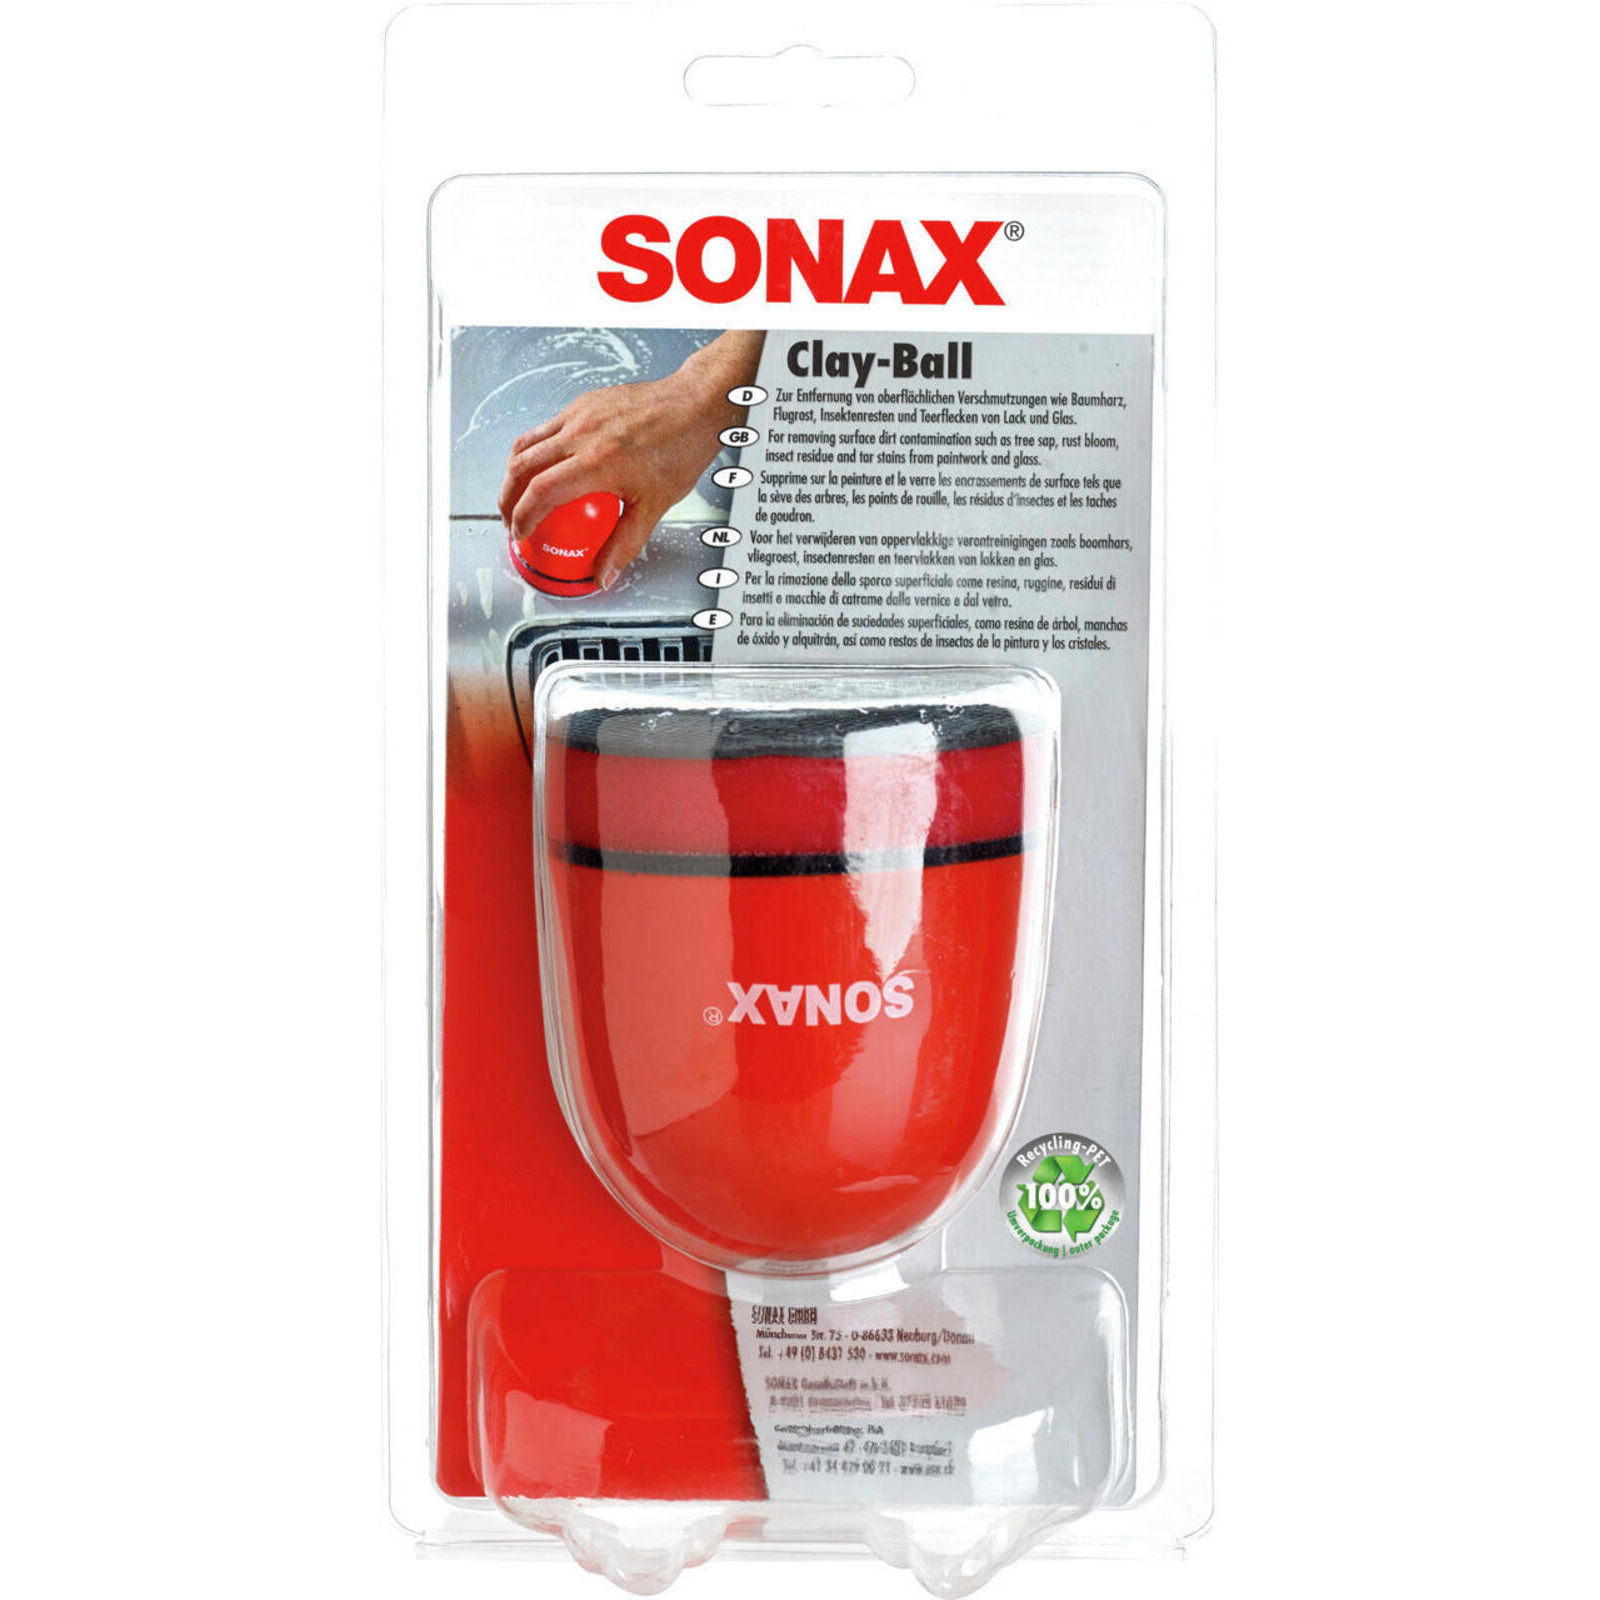 SONAX Sponge Clay-Ball